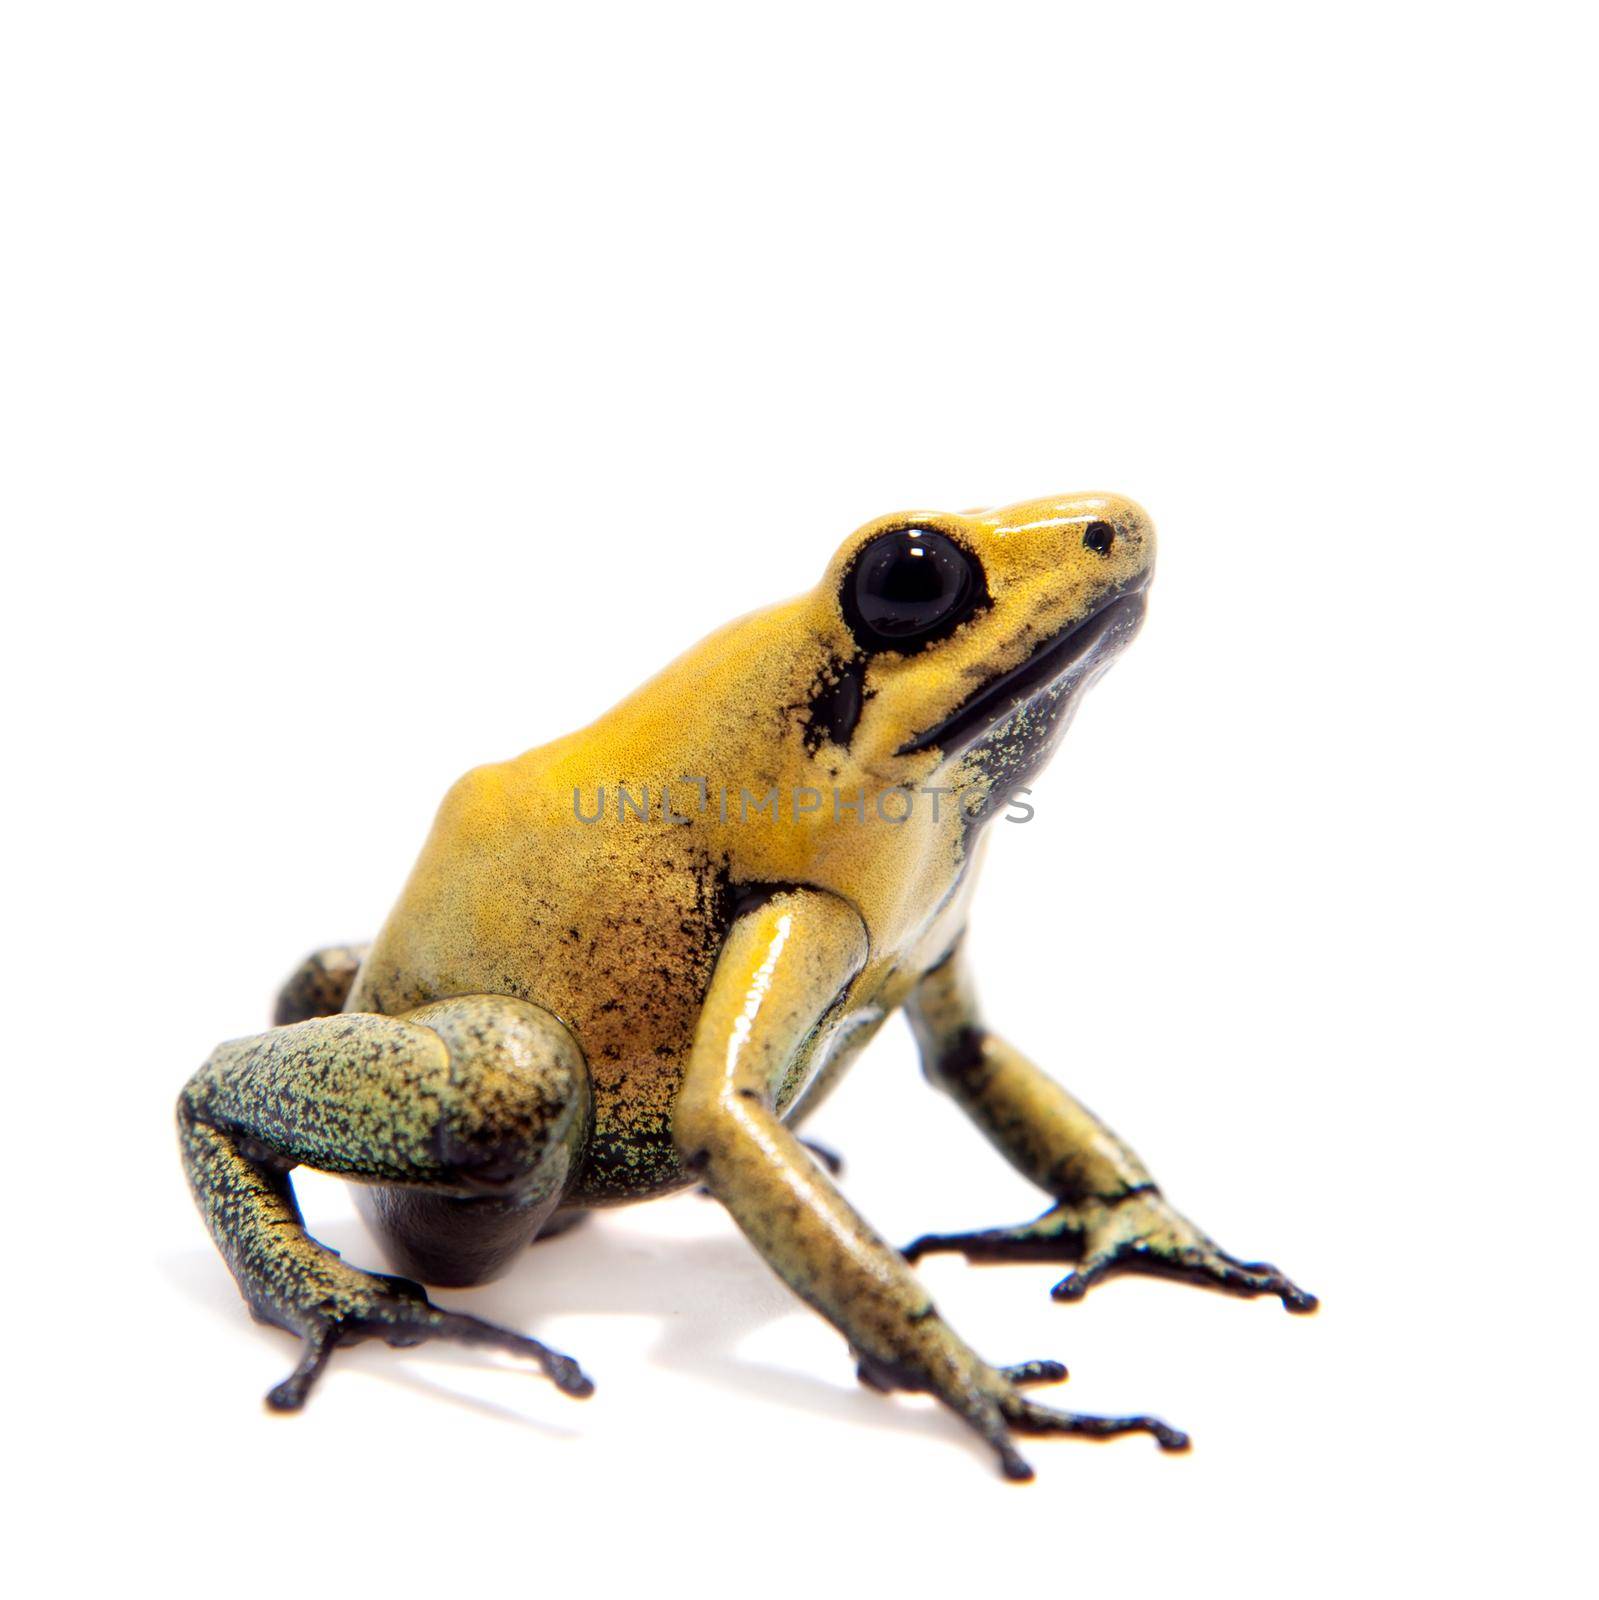 Black-legged poison frog on white by RosaJay